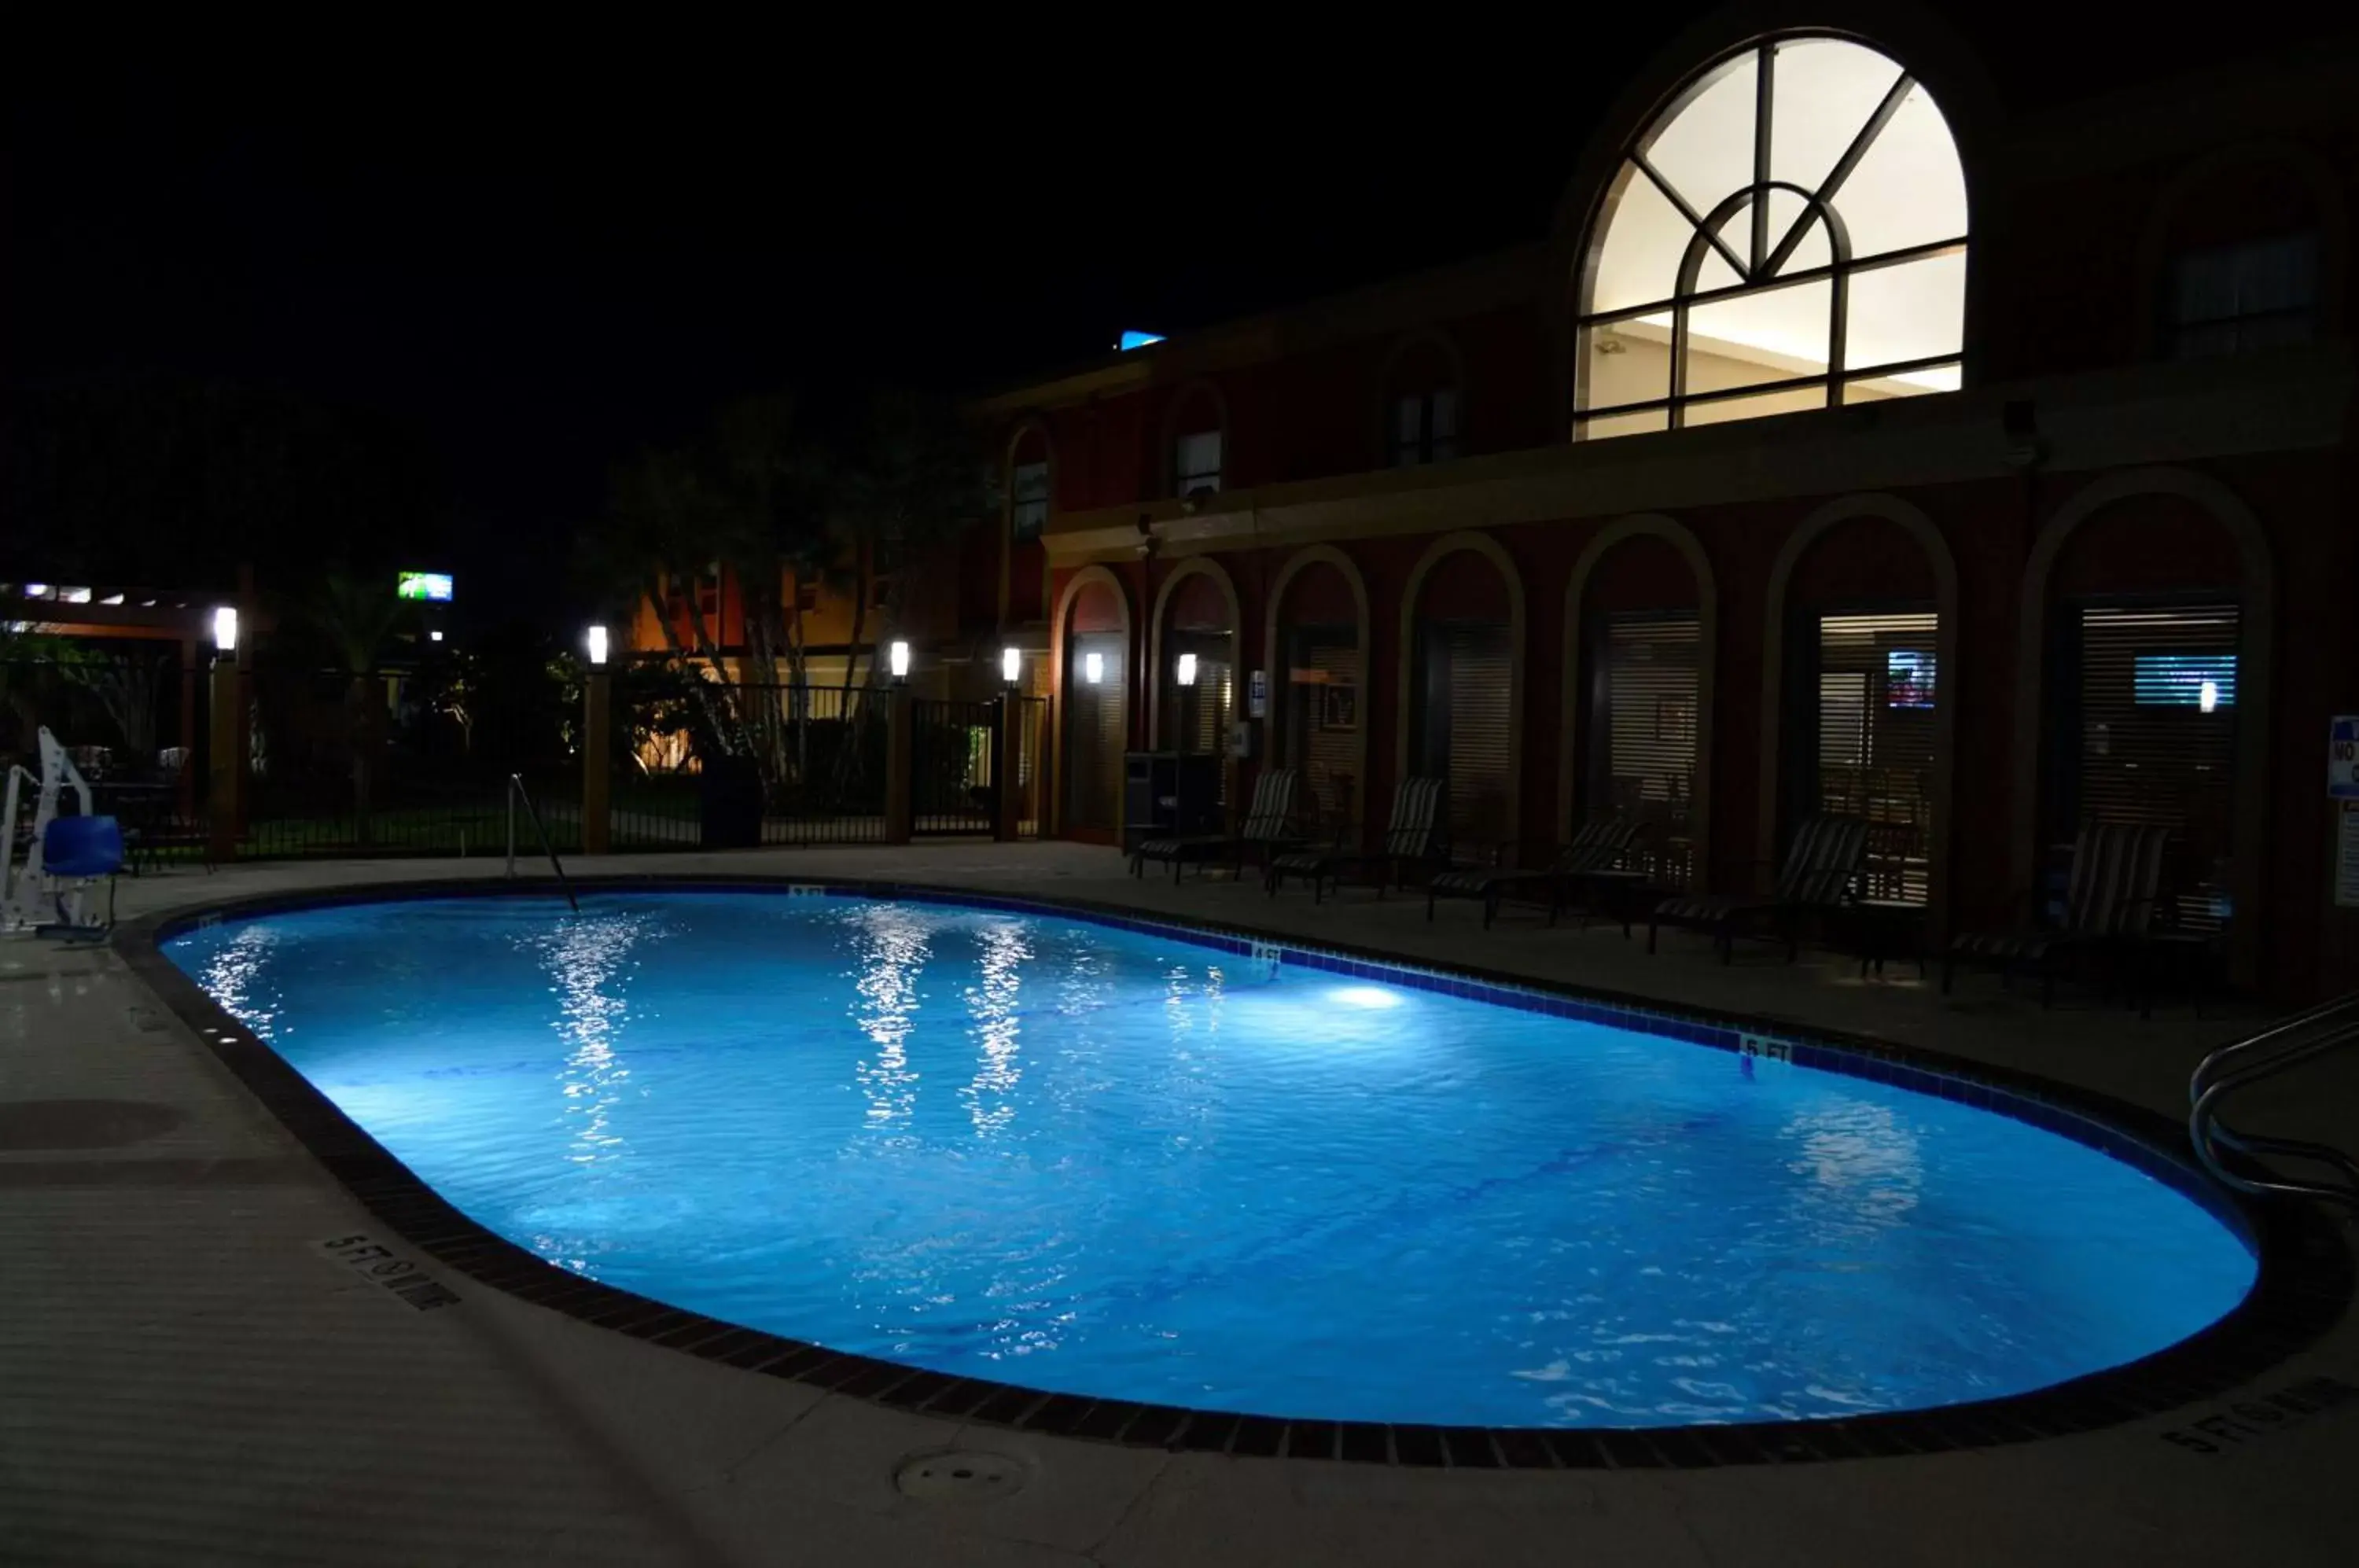 On site, Swimming Pool in Best Western Northwest Corpus Christi Inn & Suites